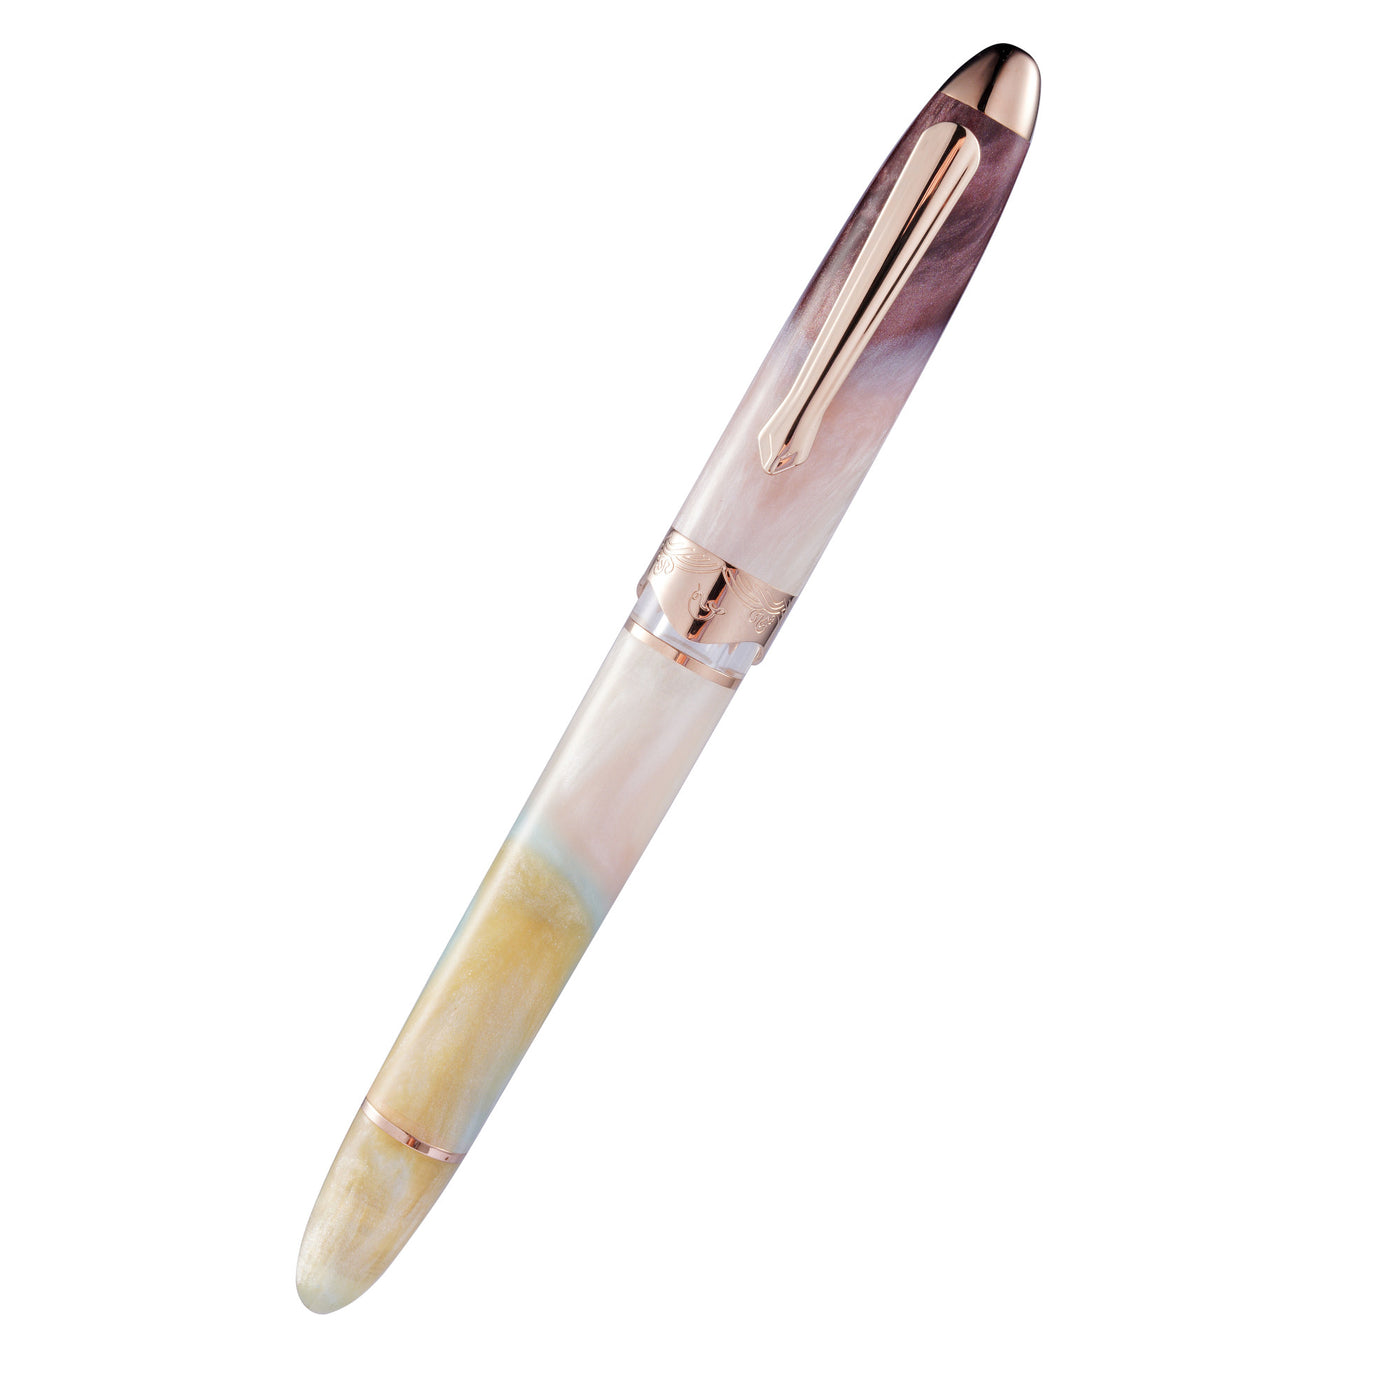 Nahvalur (Narwhal) Horizon Fountain Pen - Wonderland (Limited Edition)